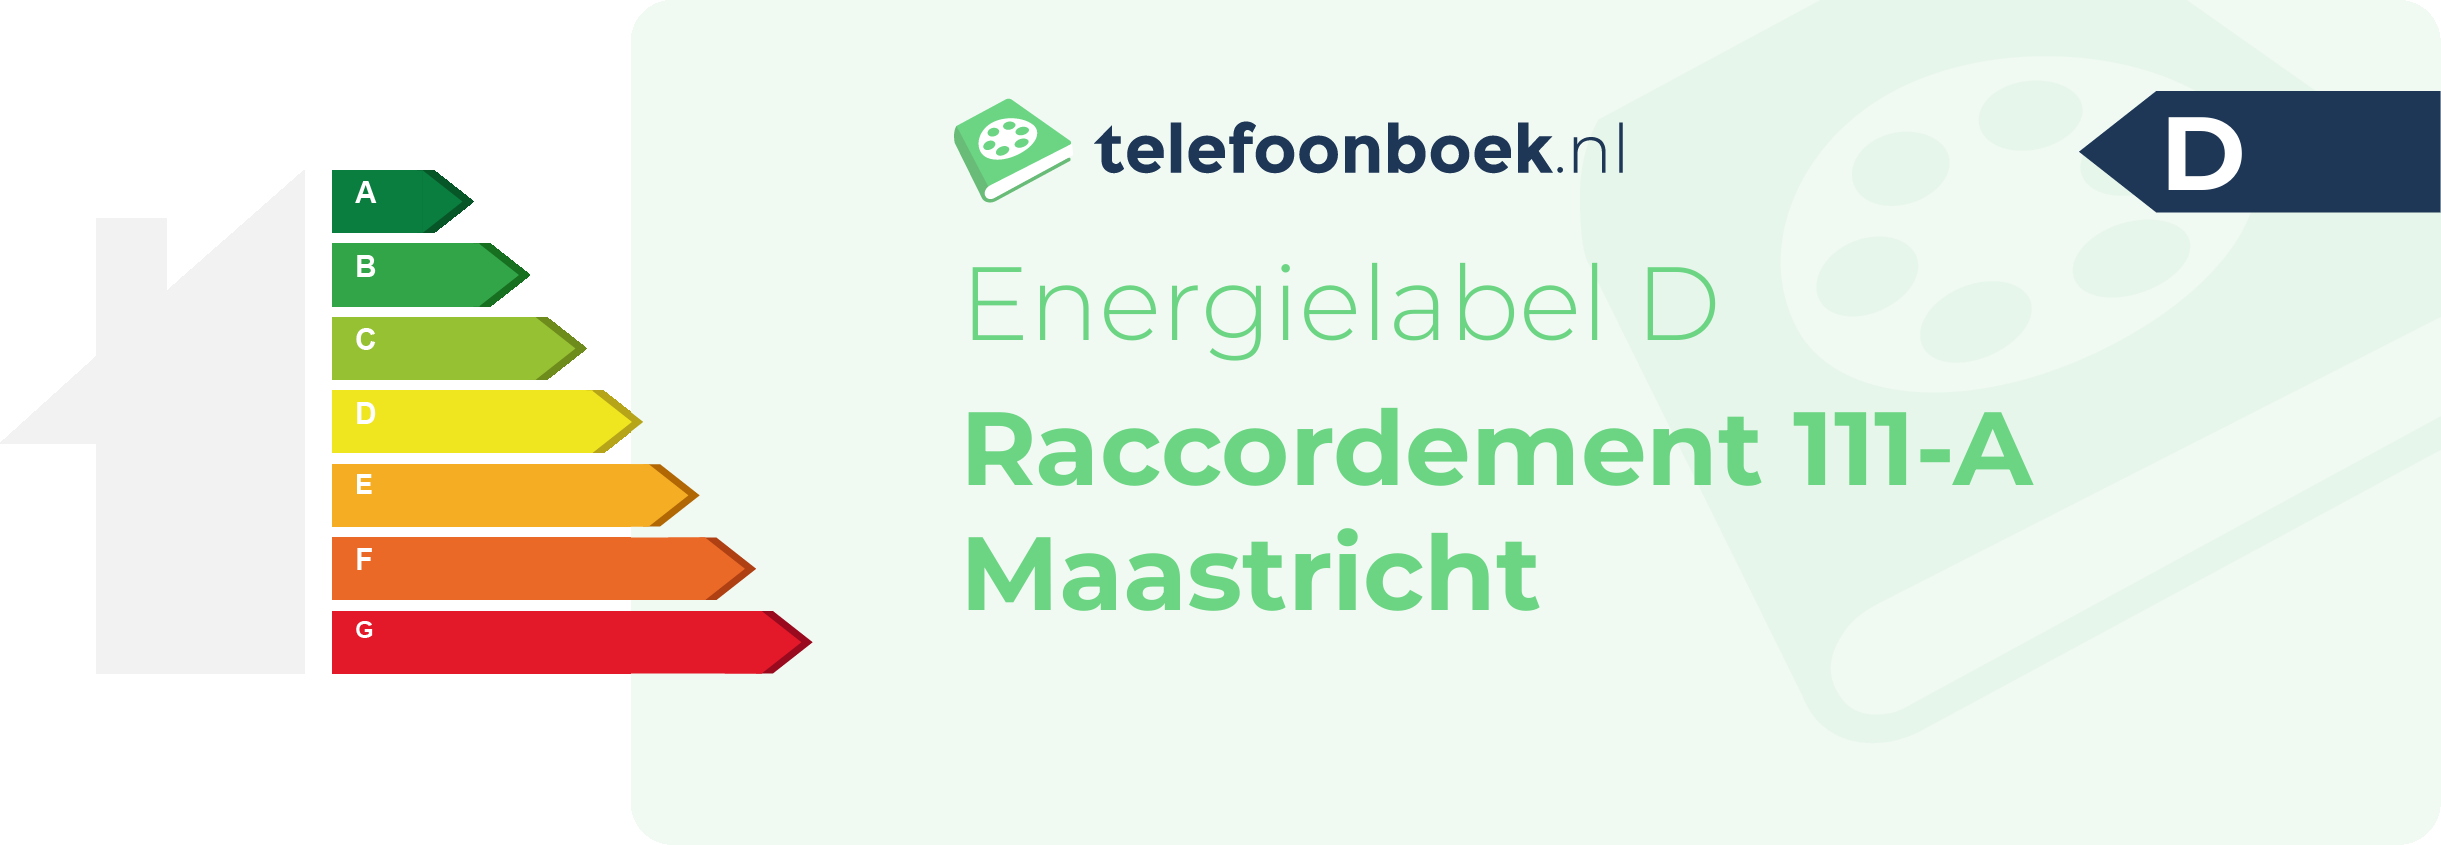 Energielabel Raccordement 111-A Maastricht